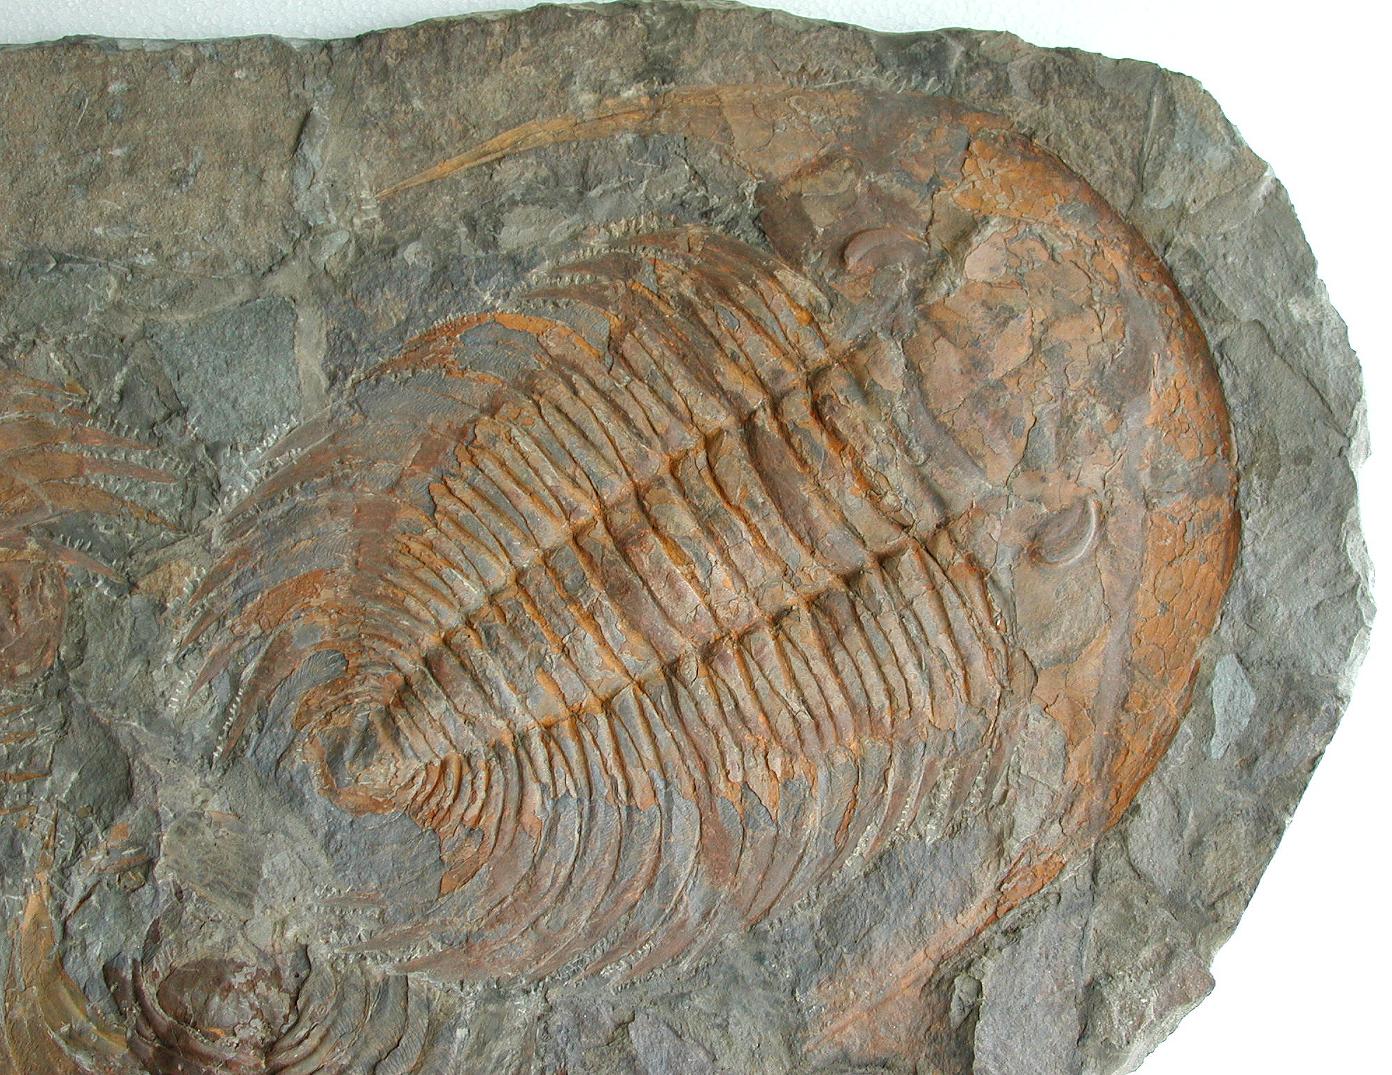 A Large Multiple Paradoxides Trilobite Fossil Plaque (Ex. Christie's) - Image 5 of 9